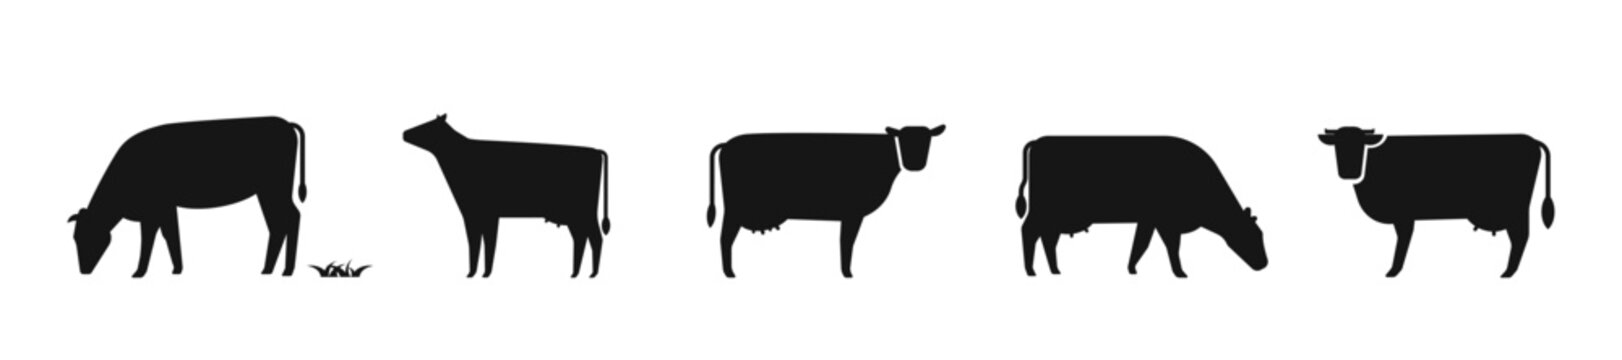 Grazing cow vector set. Cow body silhouette, calf icon